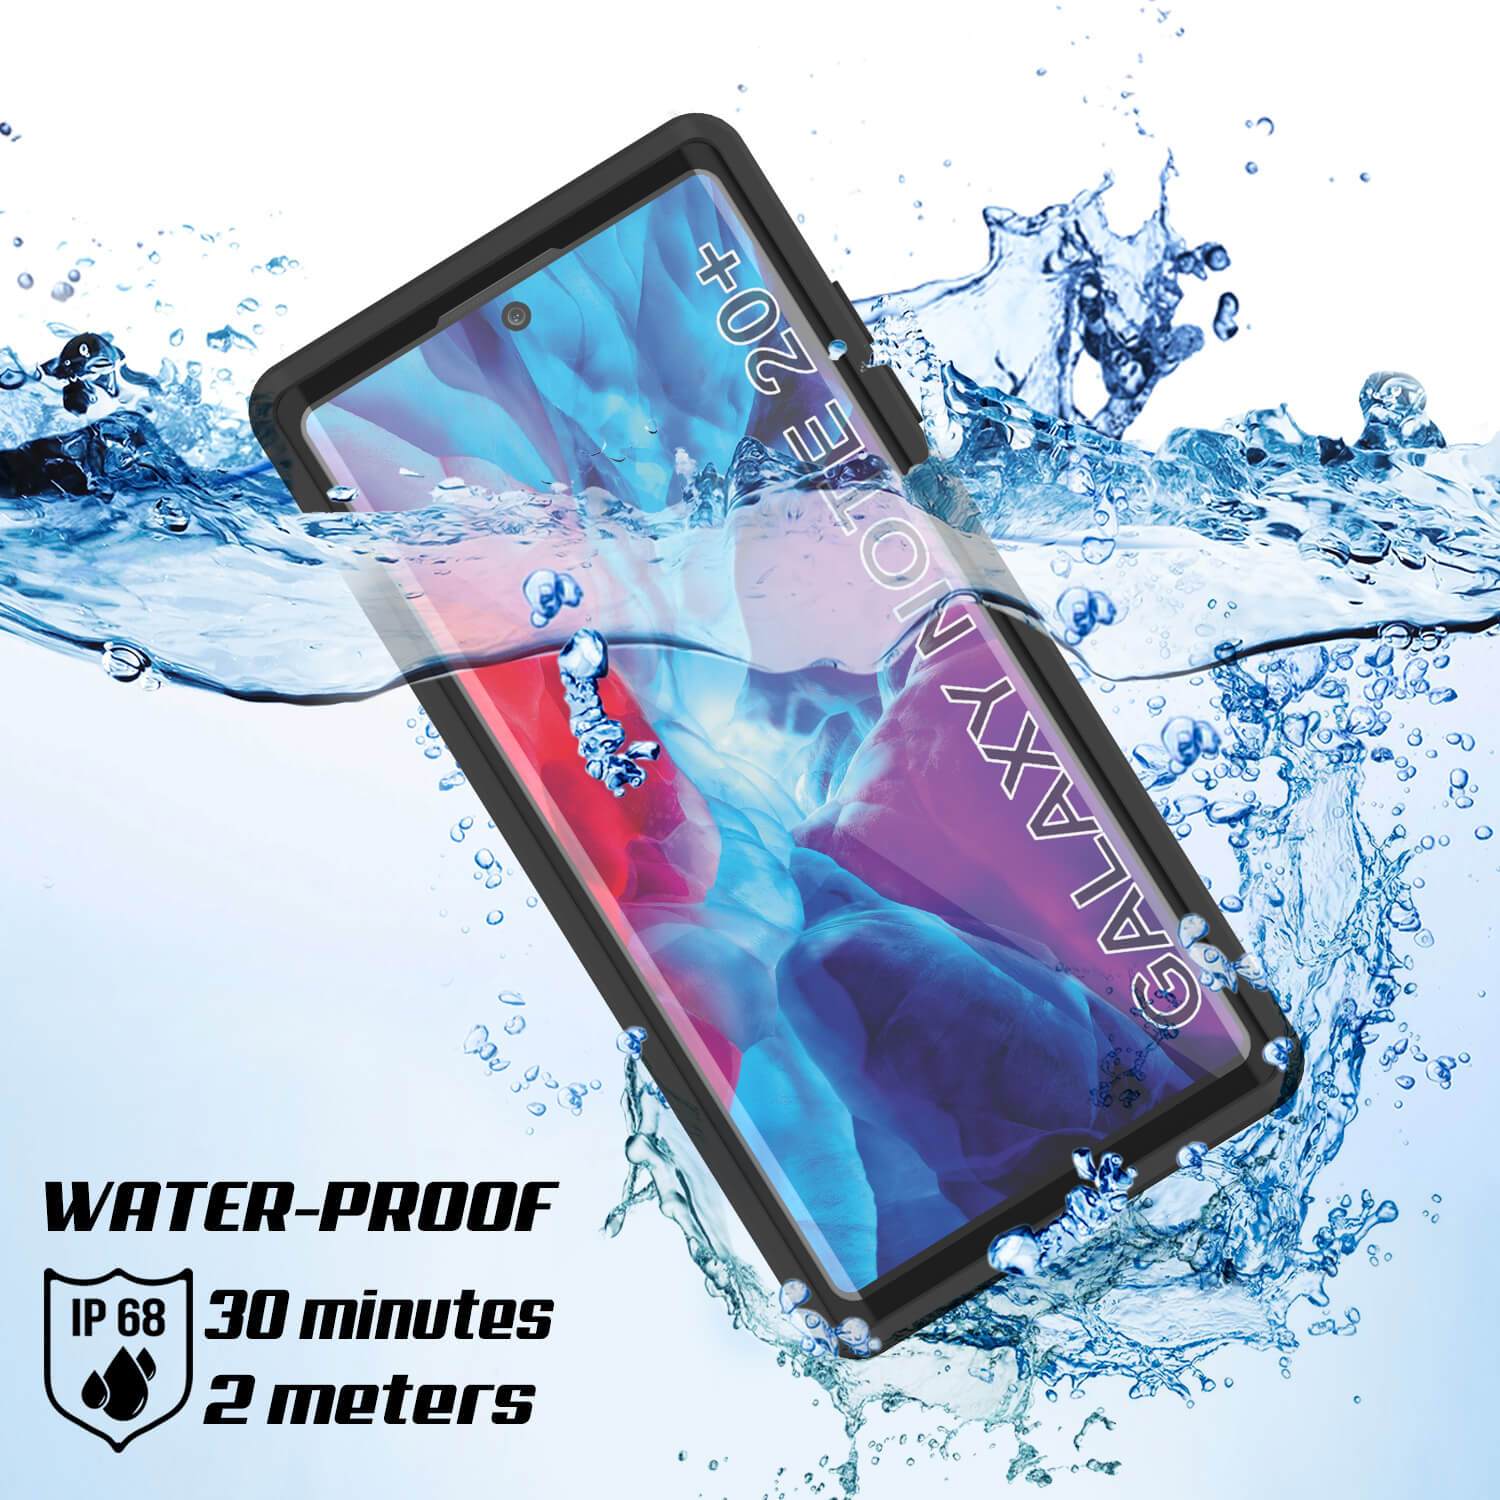 Galaxy Note 20 Ultra Waterproof Case, Punkcase Studstar Black Thin Armor Cover